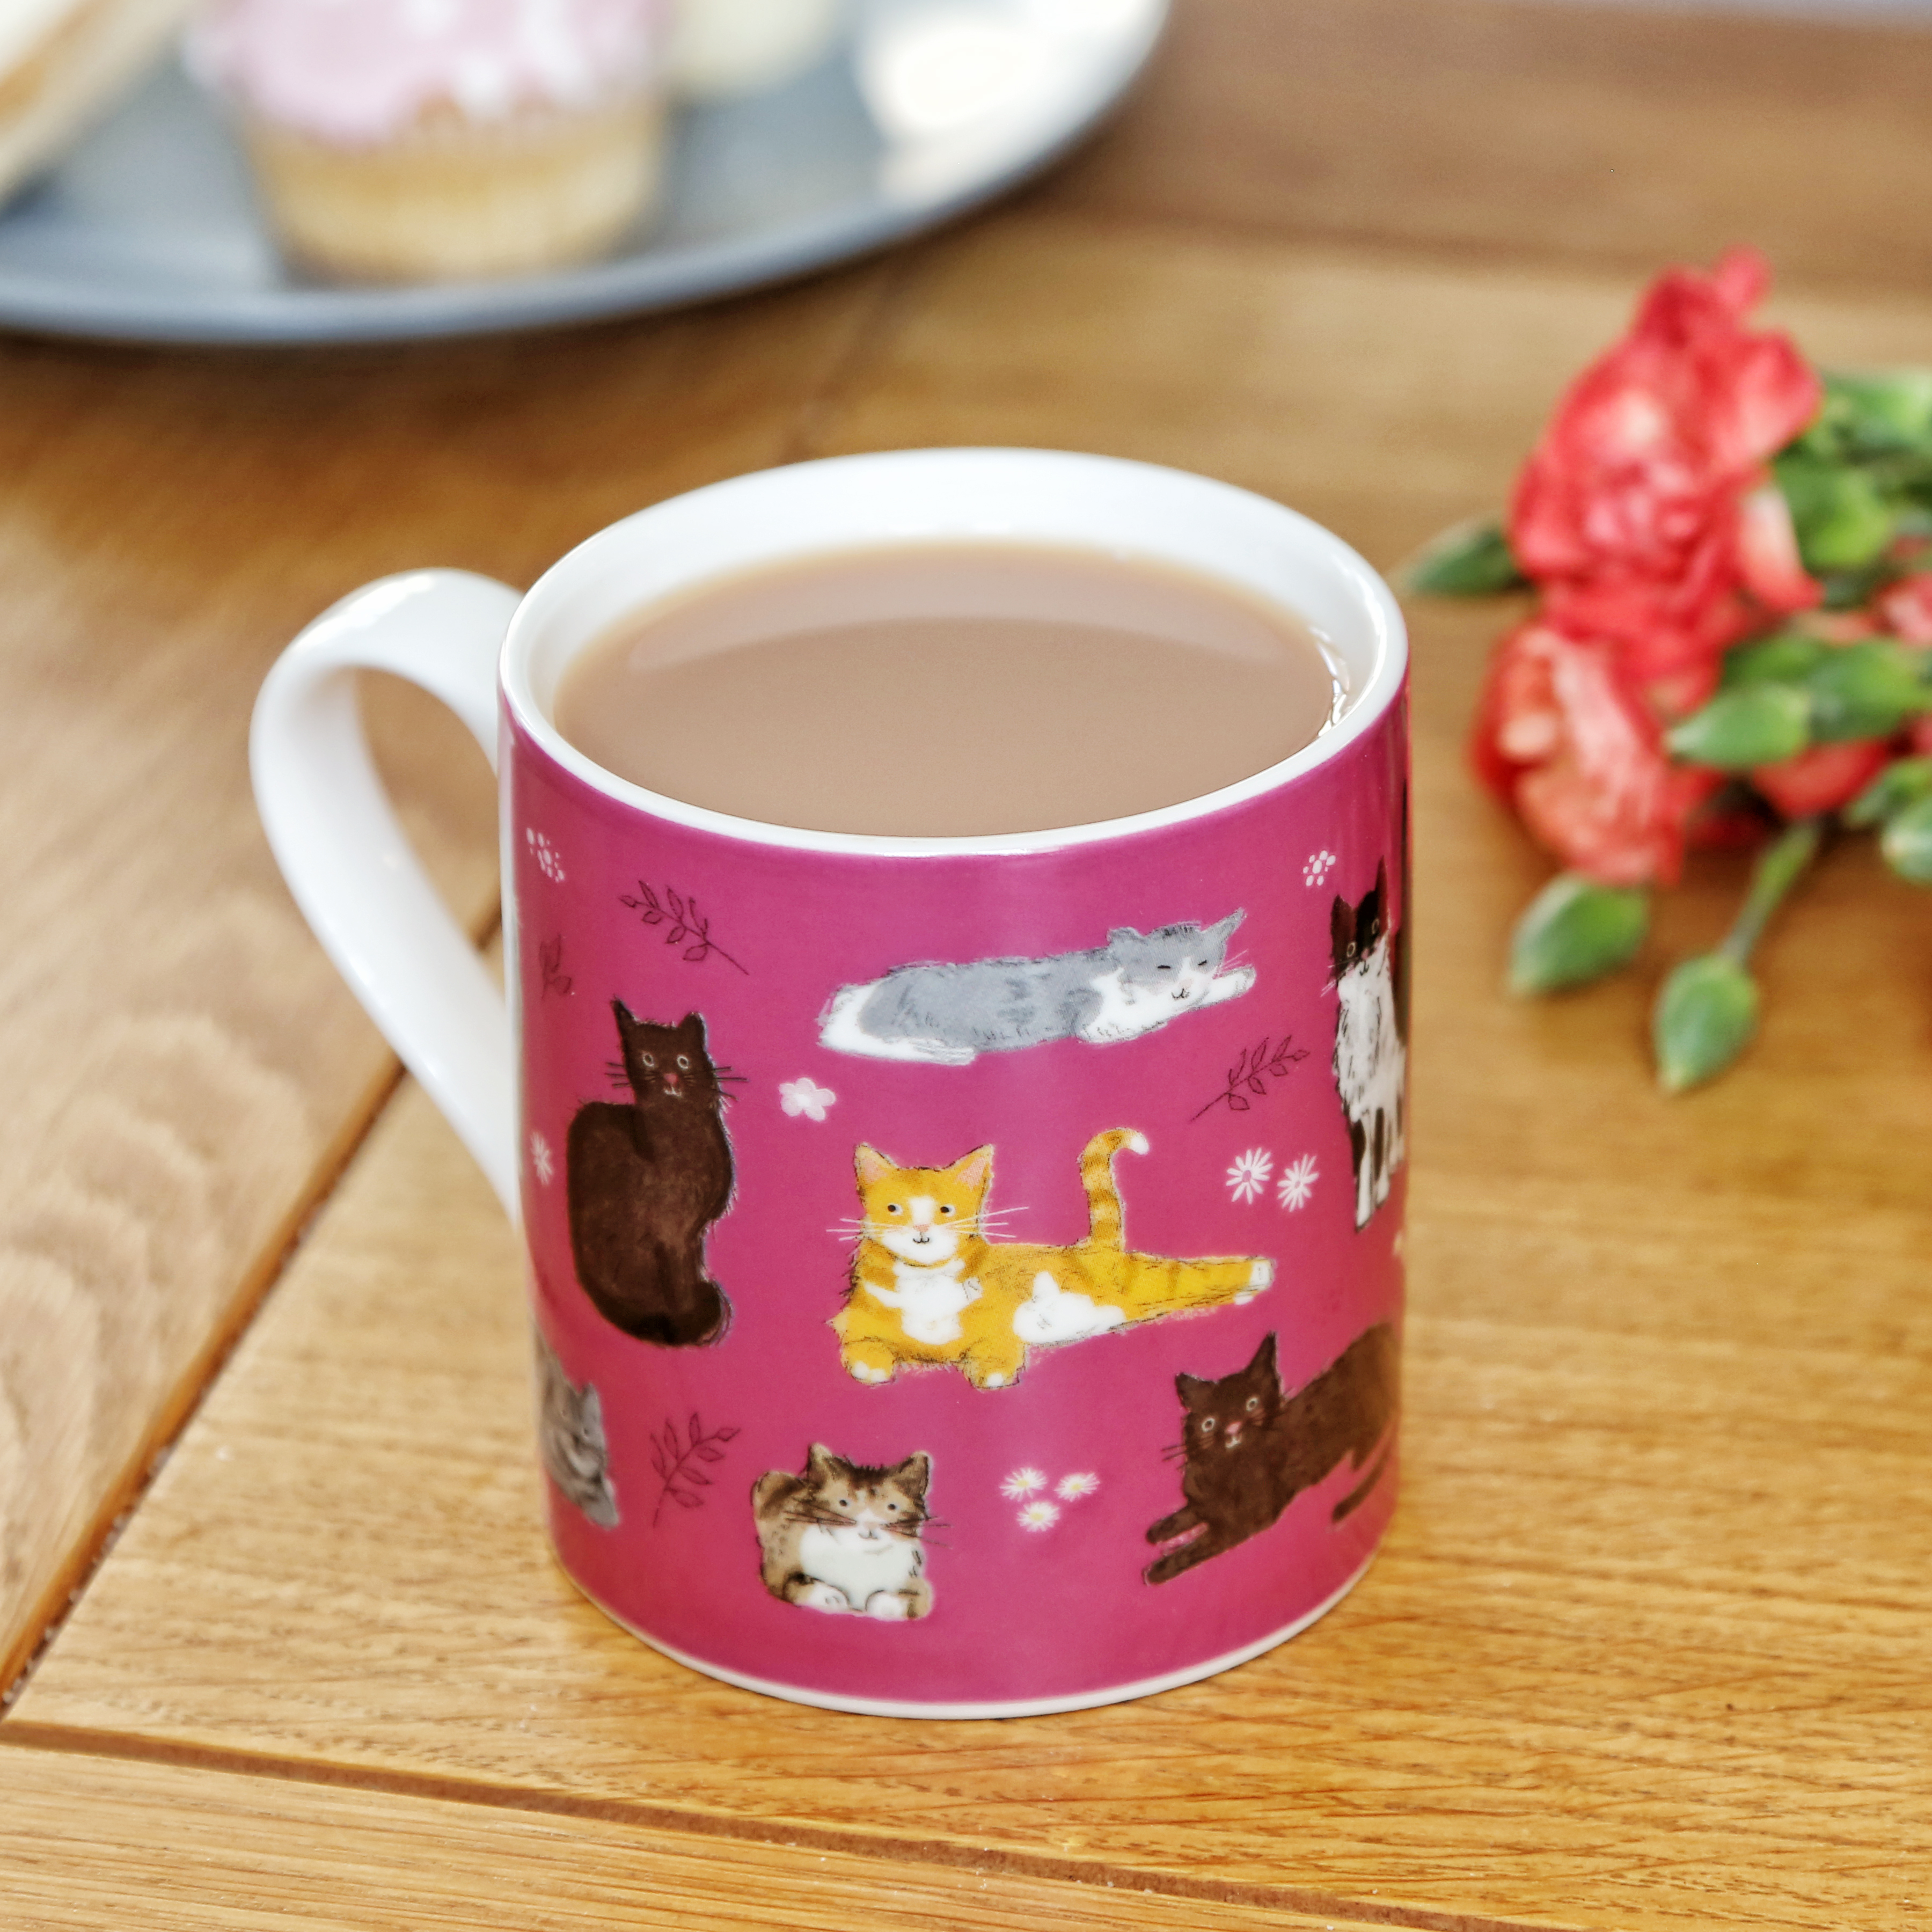 Cats & floral pattern mug